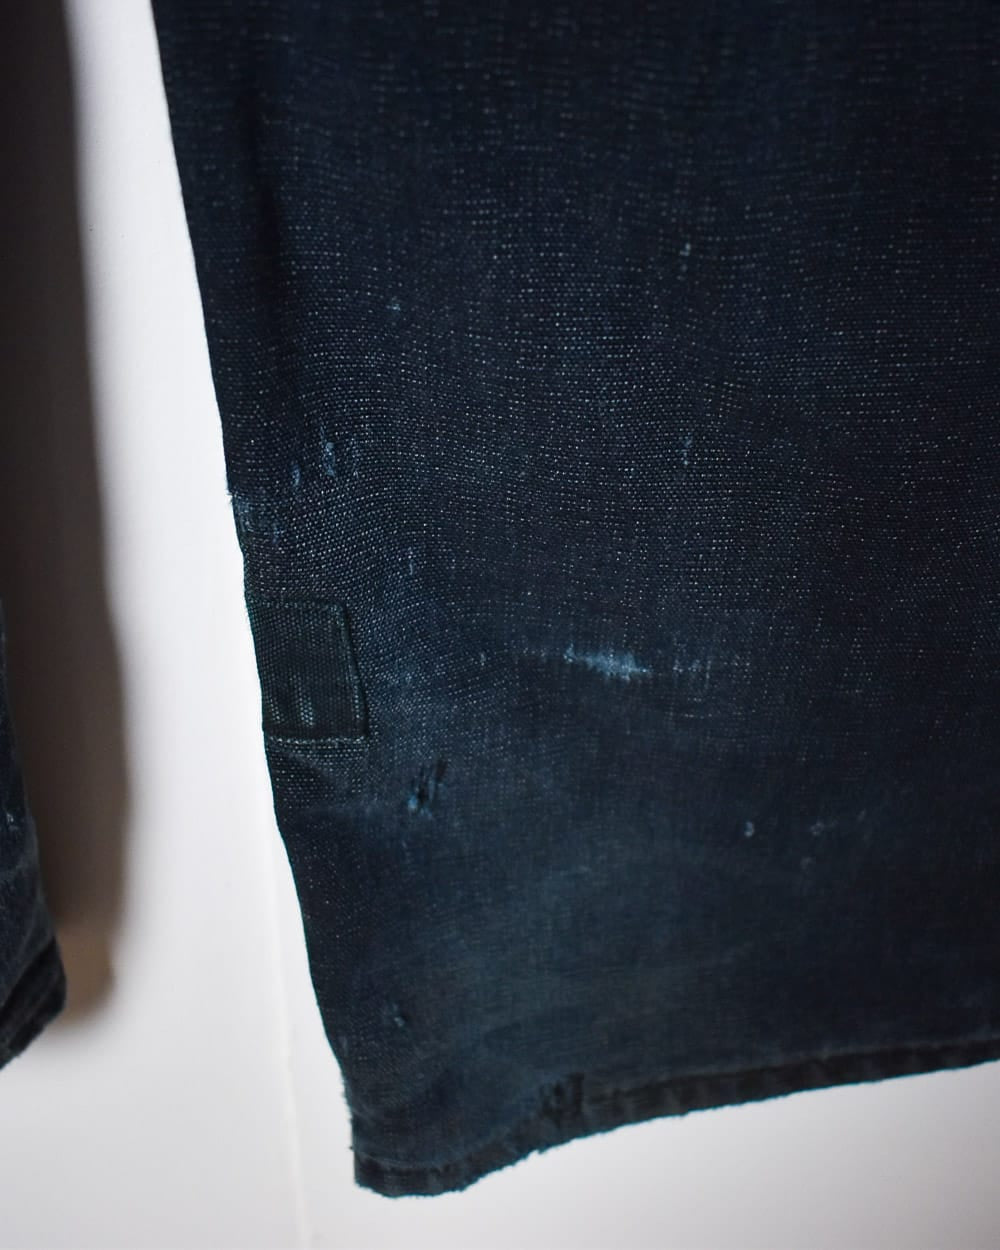 Black Carhartt Distressed Double Knee Carpenter Jeans - W34 L34